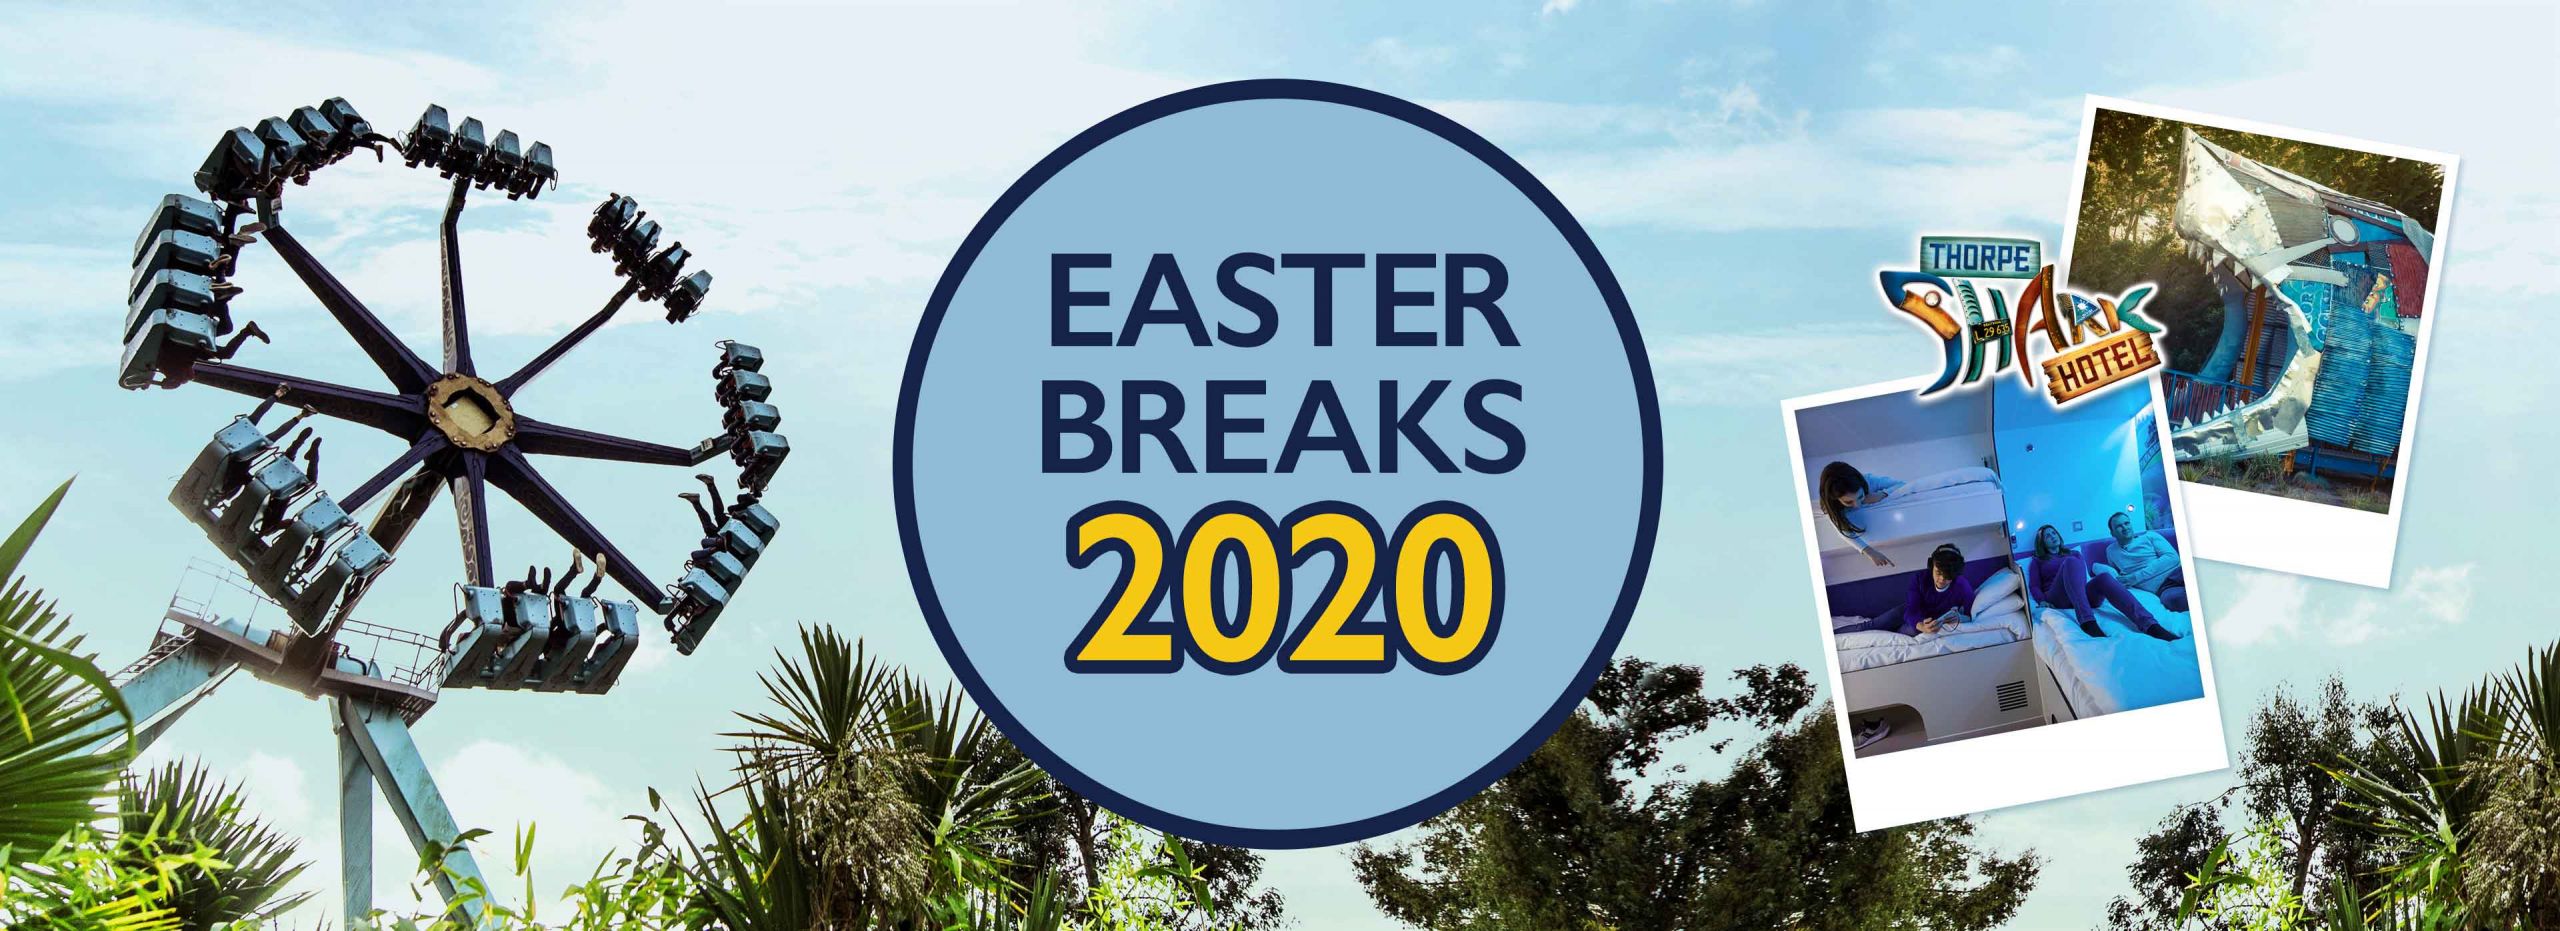 Easter Activities Near Me 2020
 Easter Breaks 2019